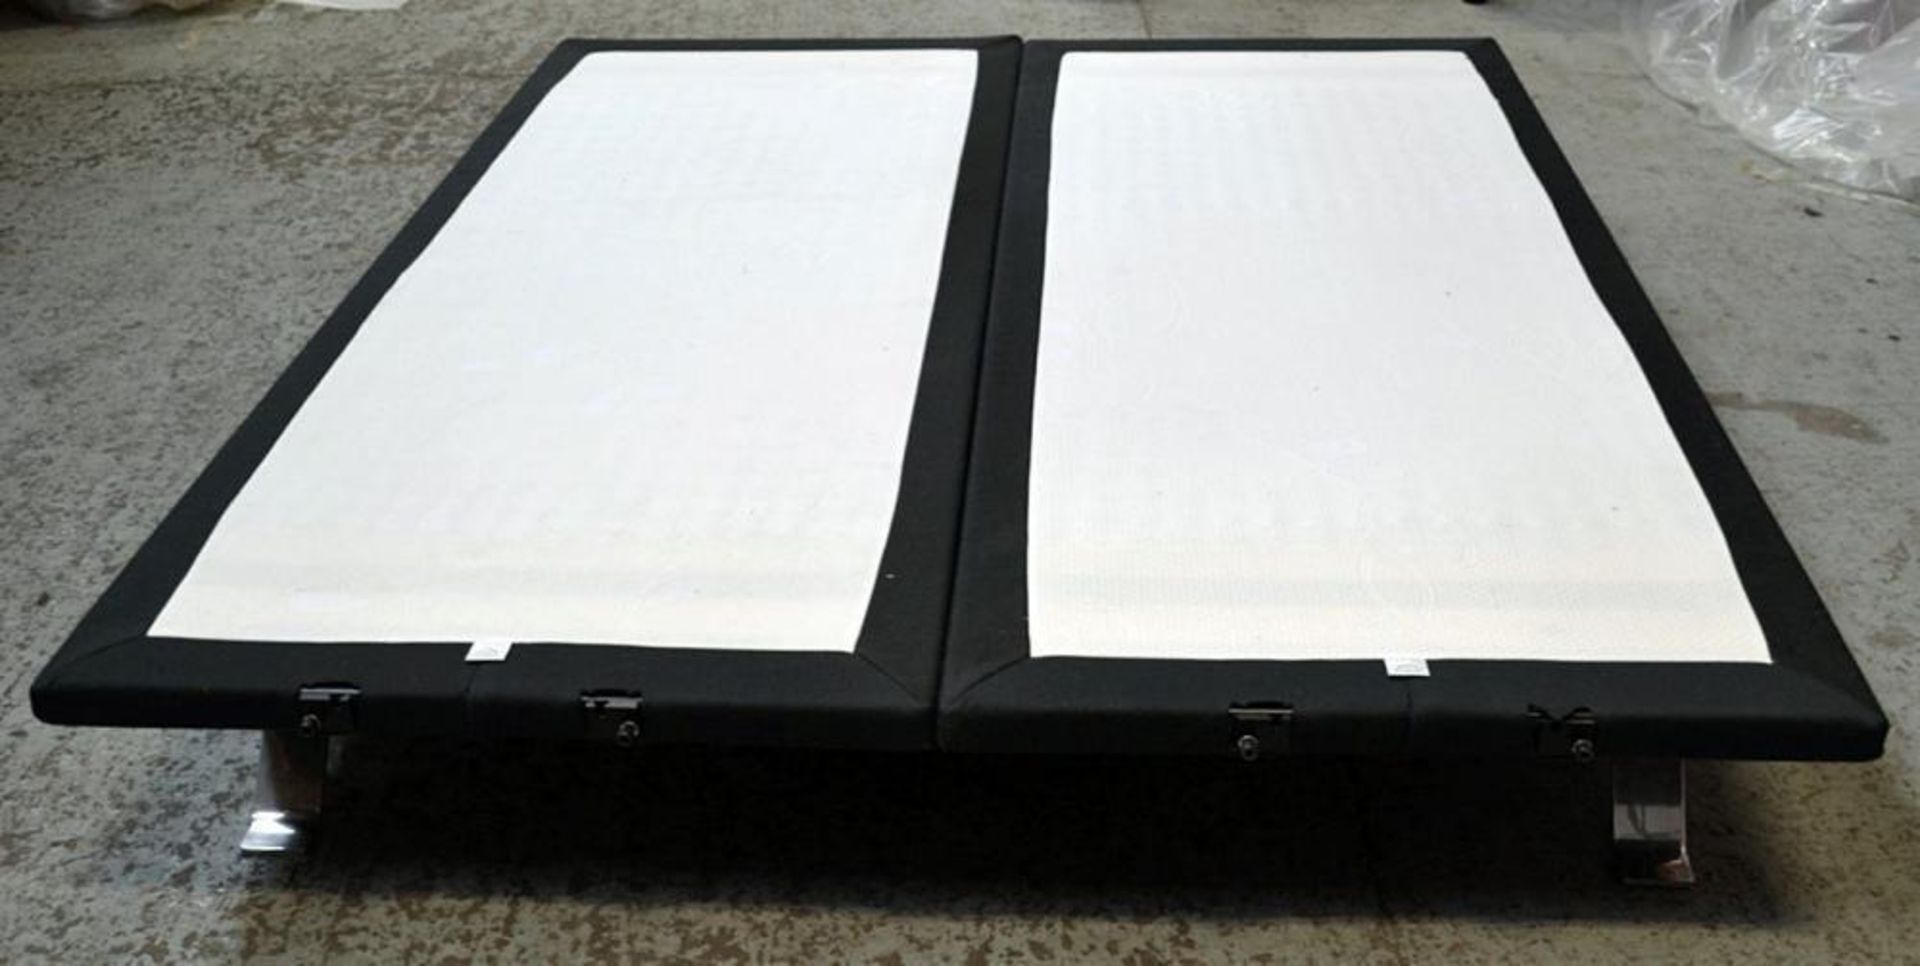 1 x Jensen EDEN Adjustable Superking Bed Base - W180 x L210 x H34cm - Colour: Black - CL087 - Ref: 2 - Image 9 of 13